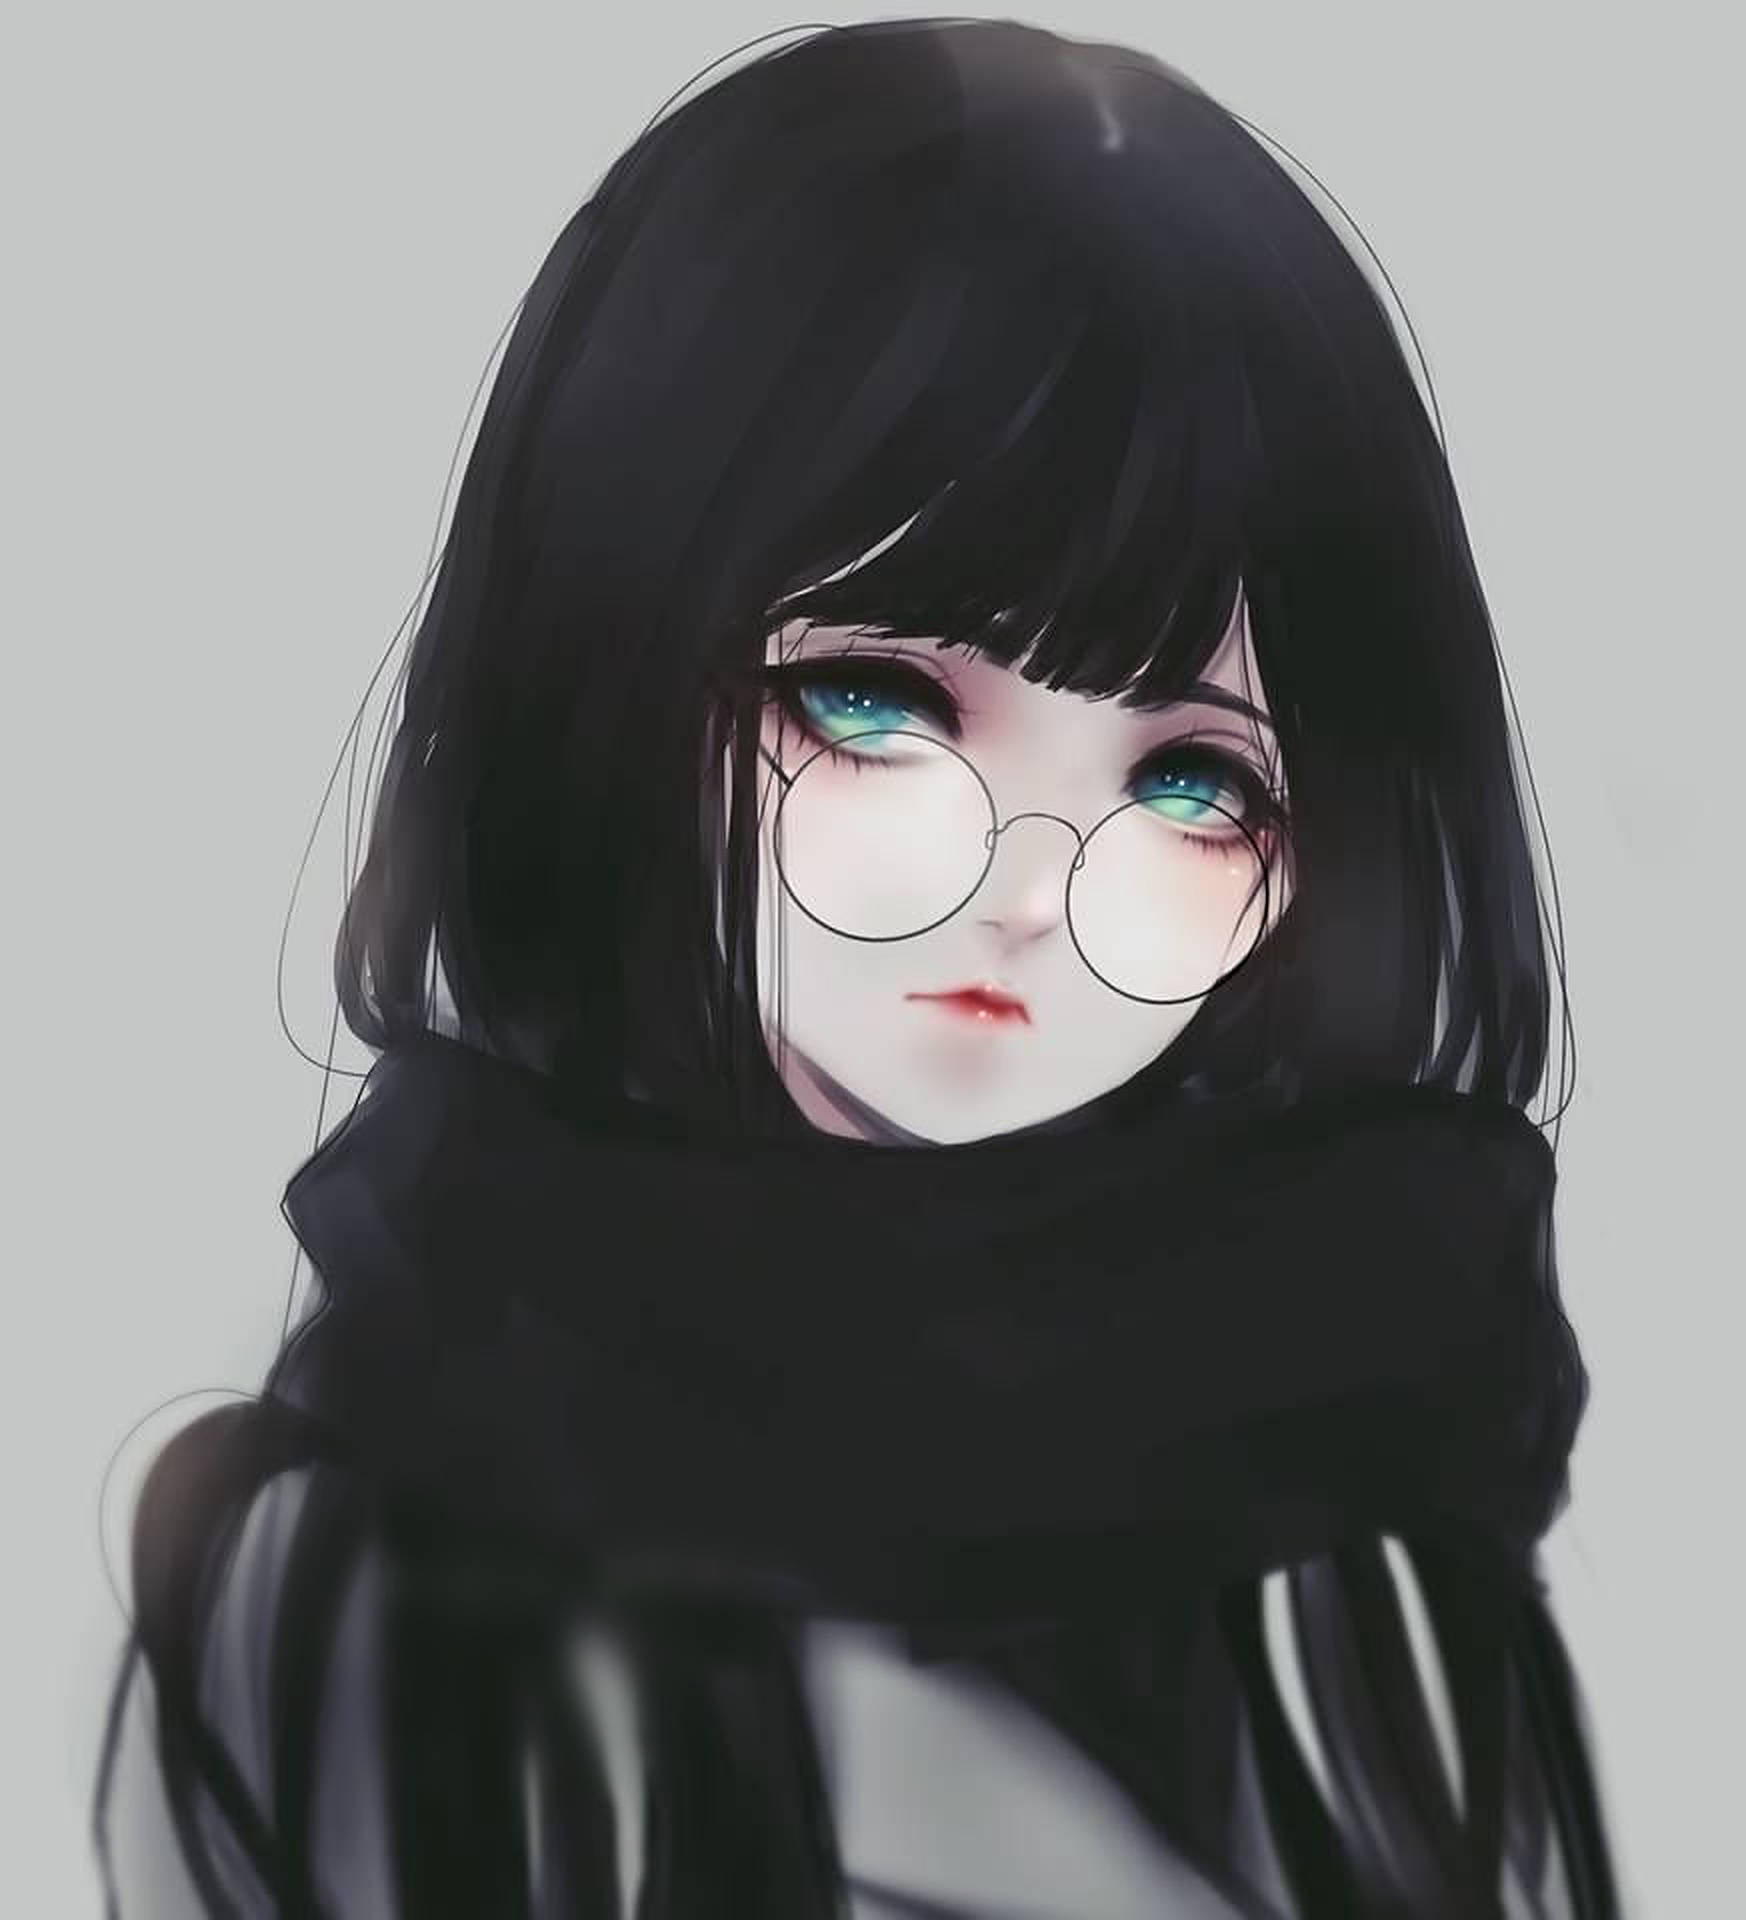 Anime Girl With Glasses Emo PFP Wallpaper